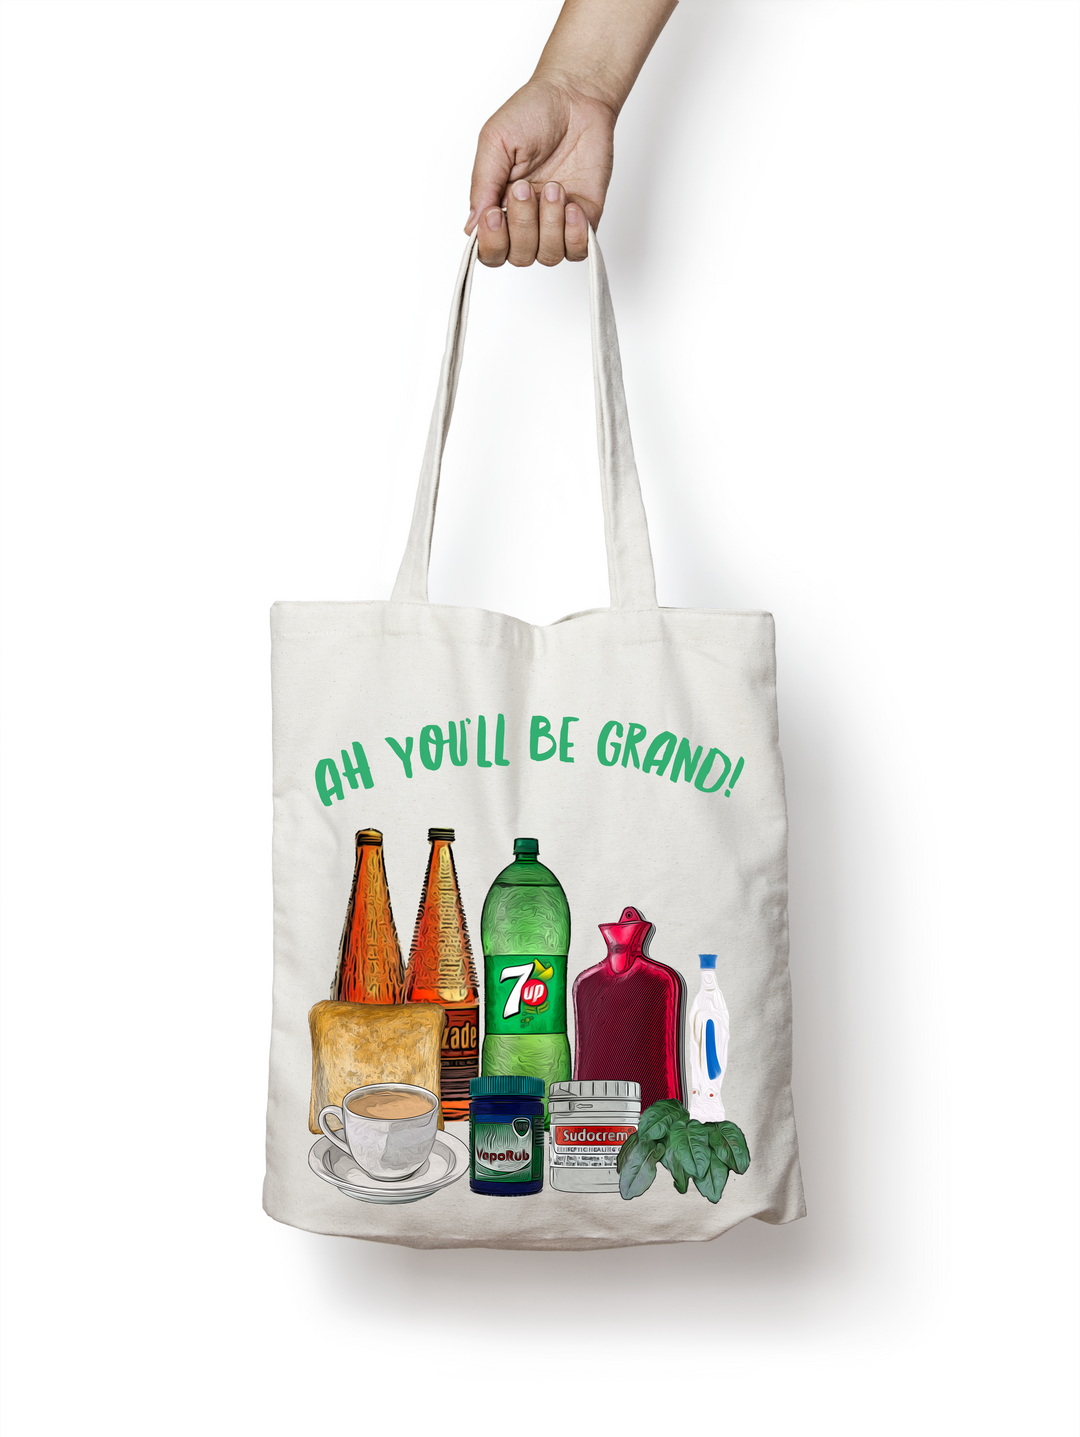 The "Ah You'll Be Grand" Tote Bag